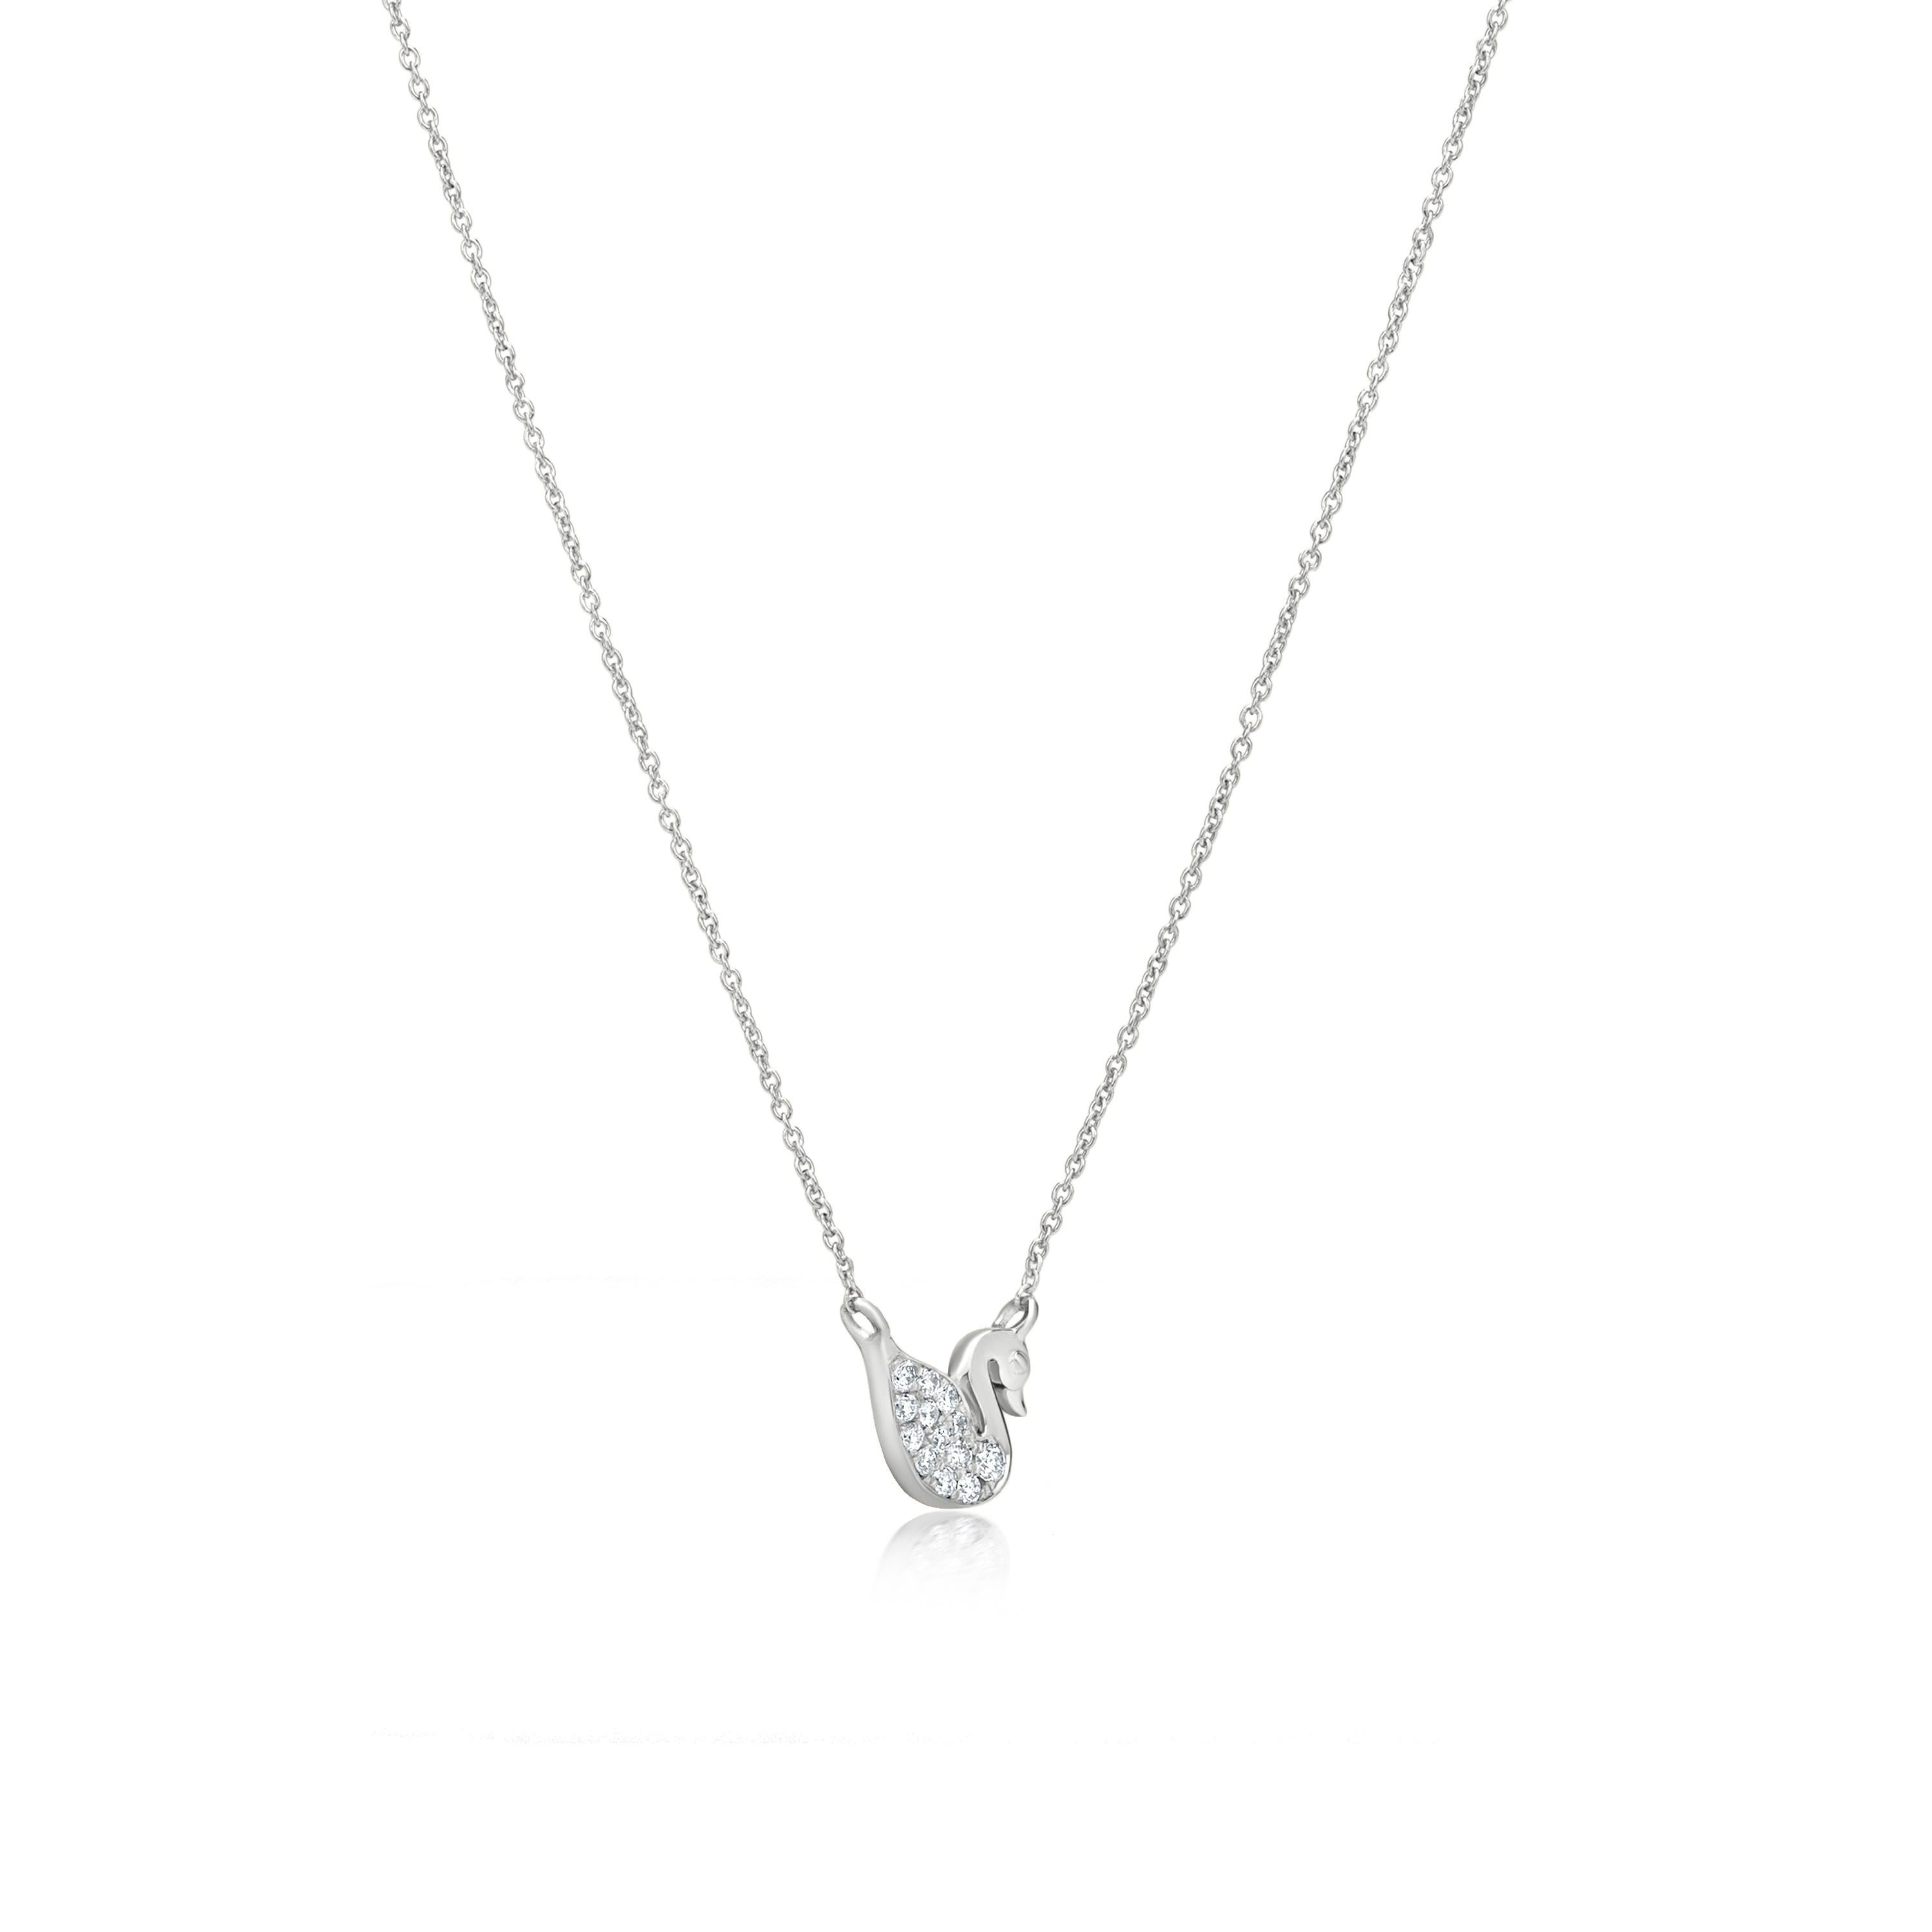 Contemporary Luxle Swan Diamond Pendant Necklace in 18k White Gold